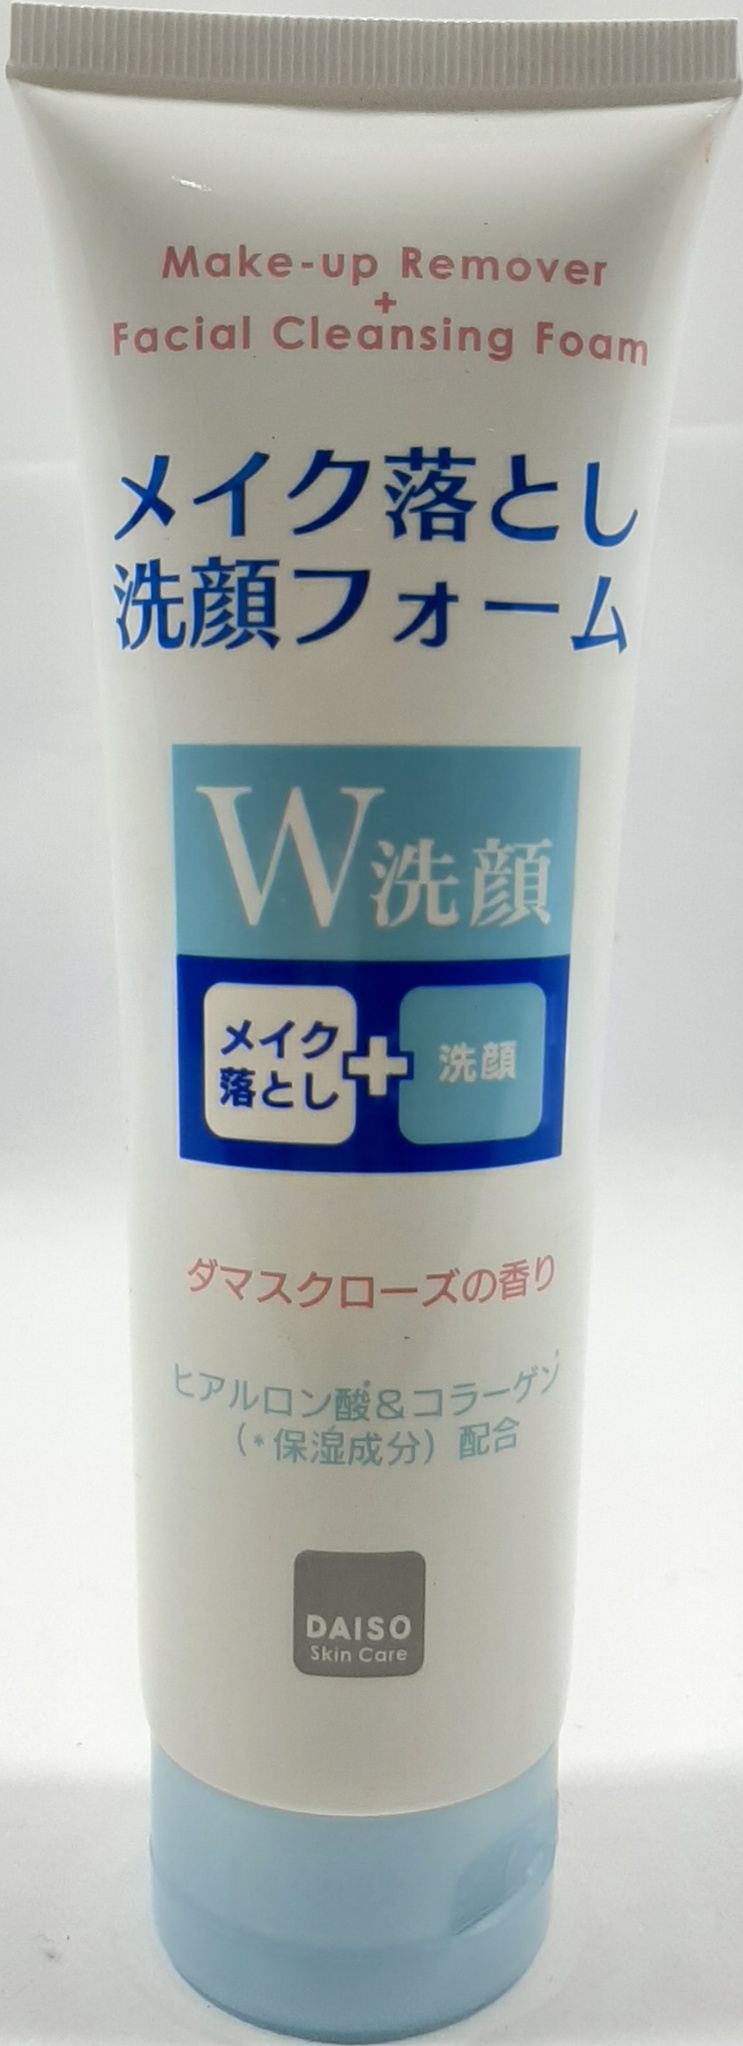 Daiso Hyaruronic Acid+Collagen Make Up Remover Facial Wash Foam